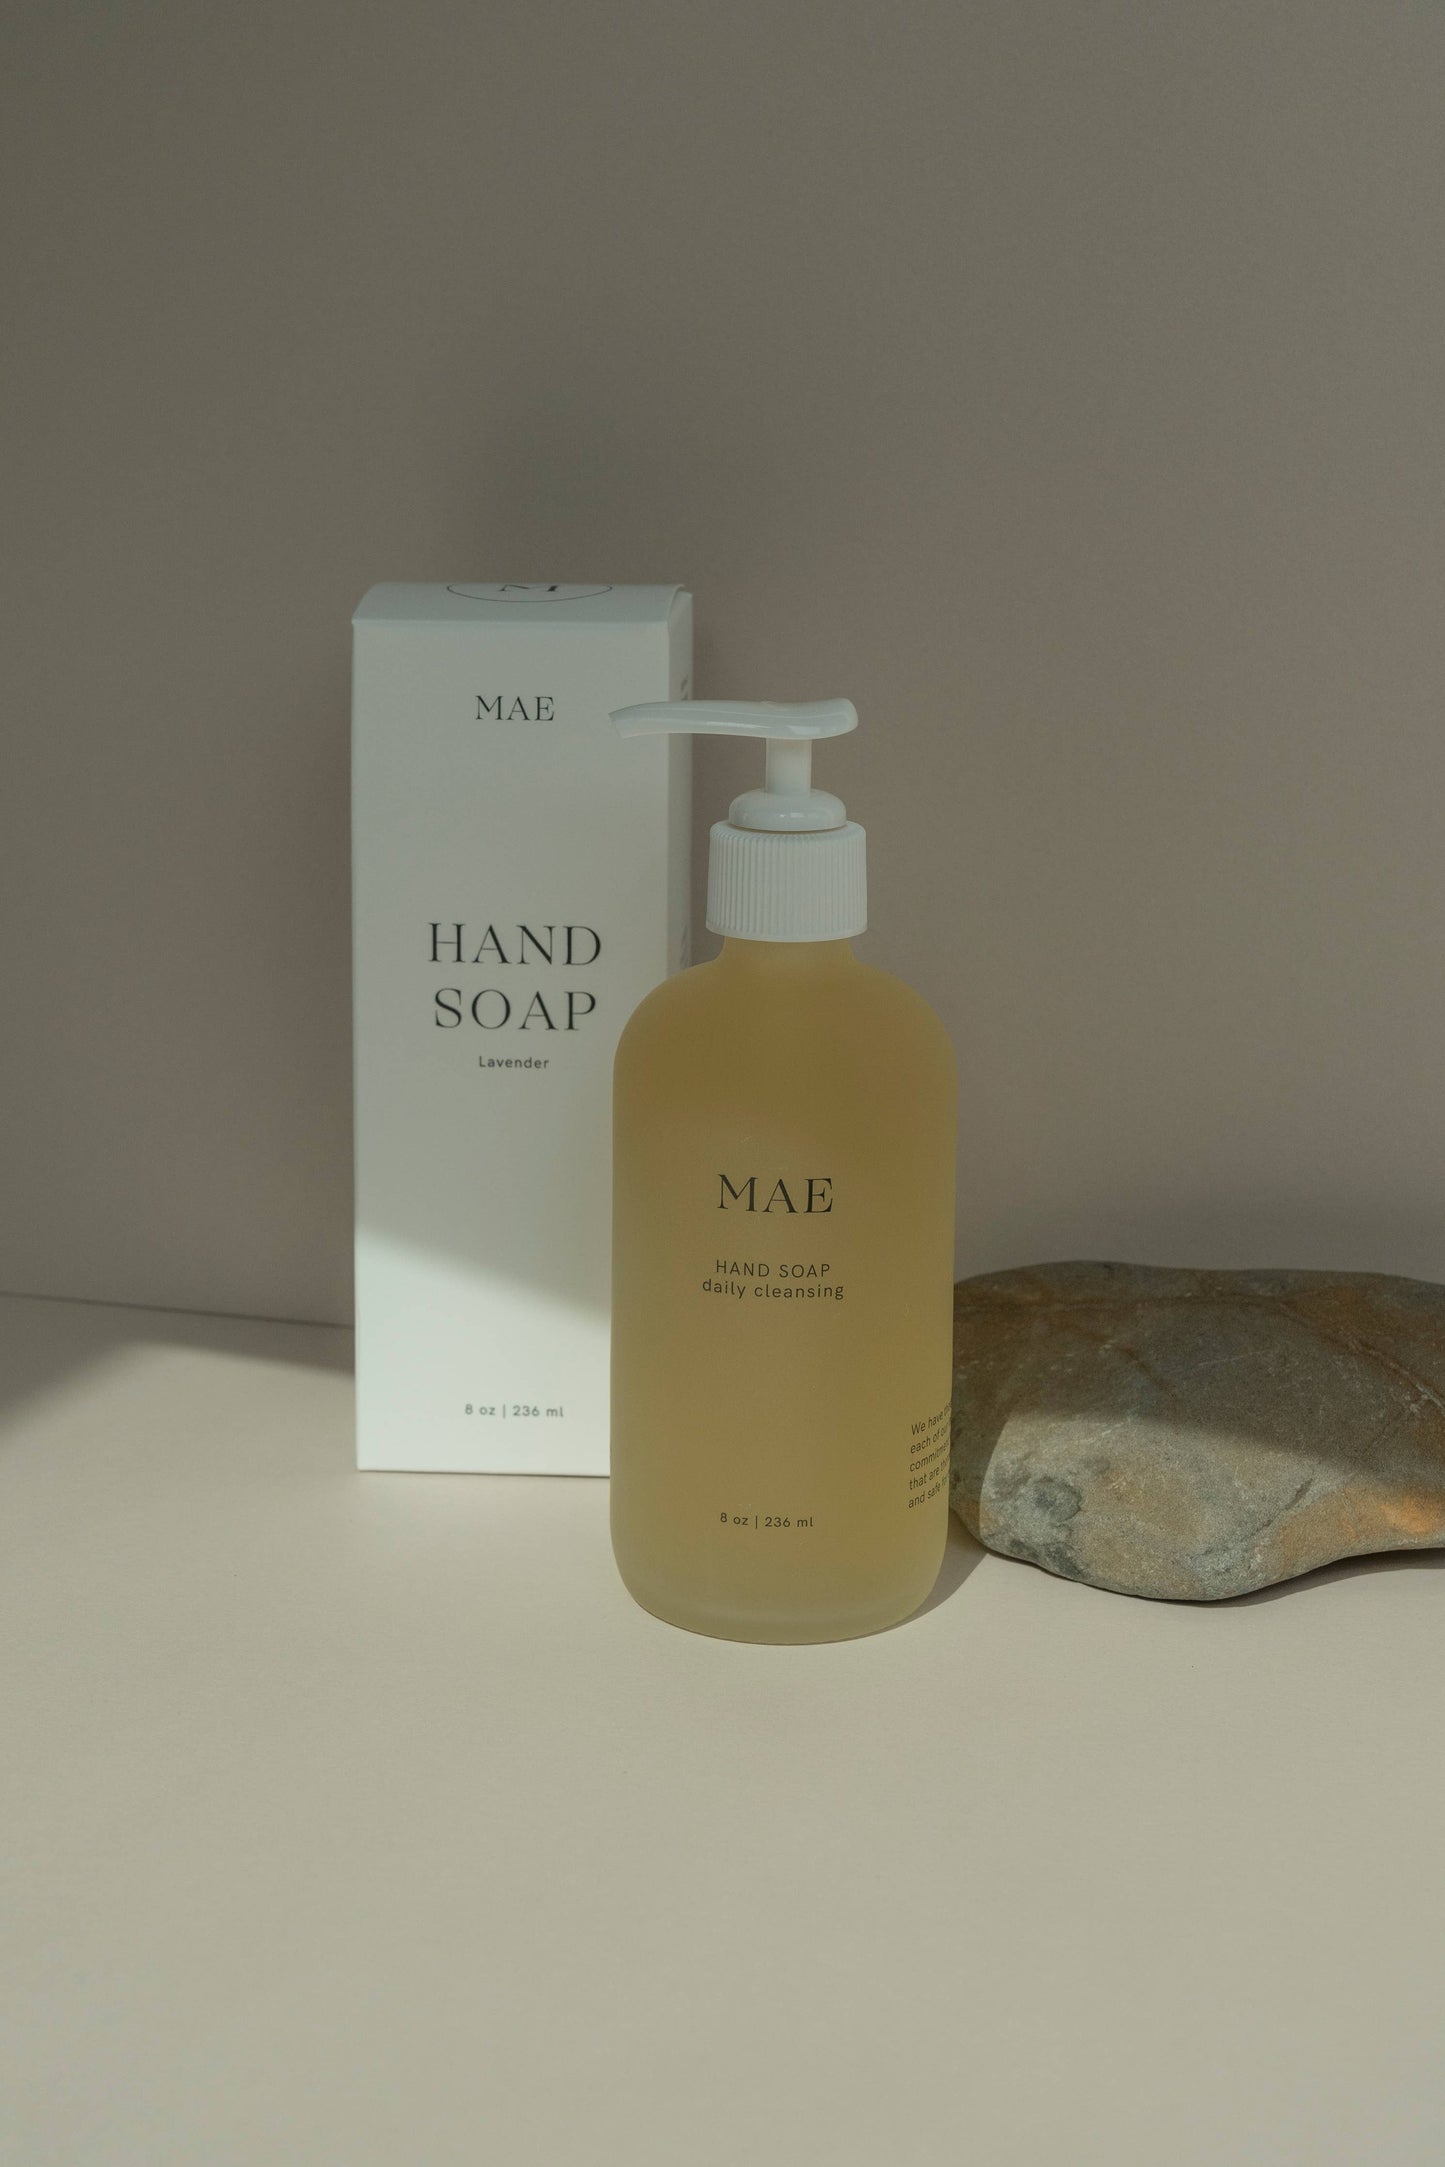 HAND SOAP: LAVENDER